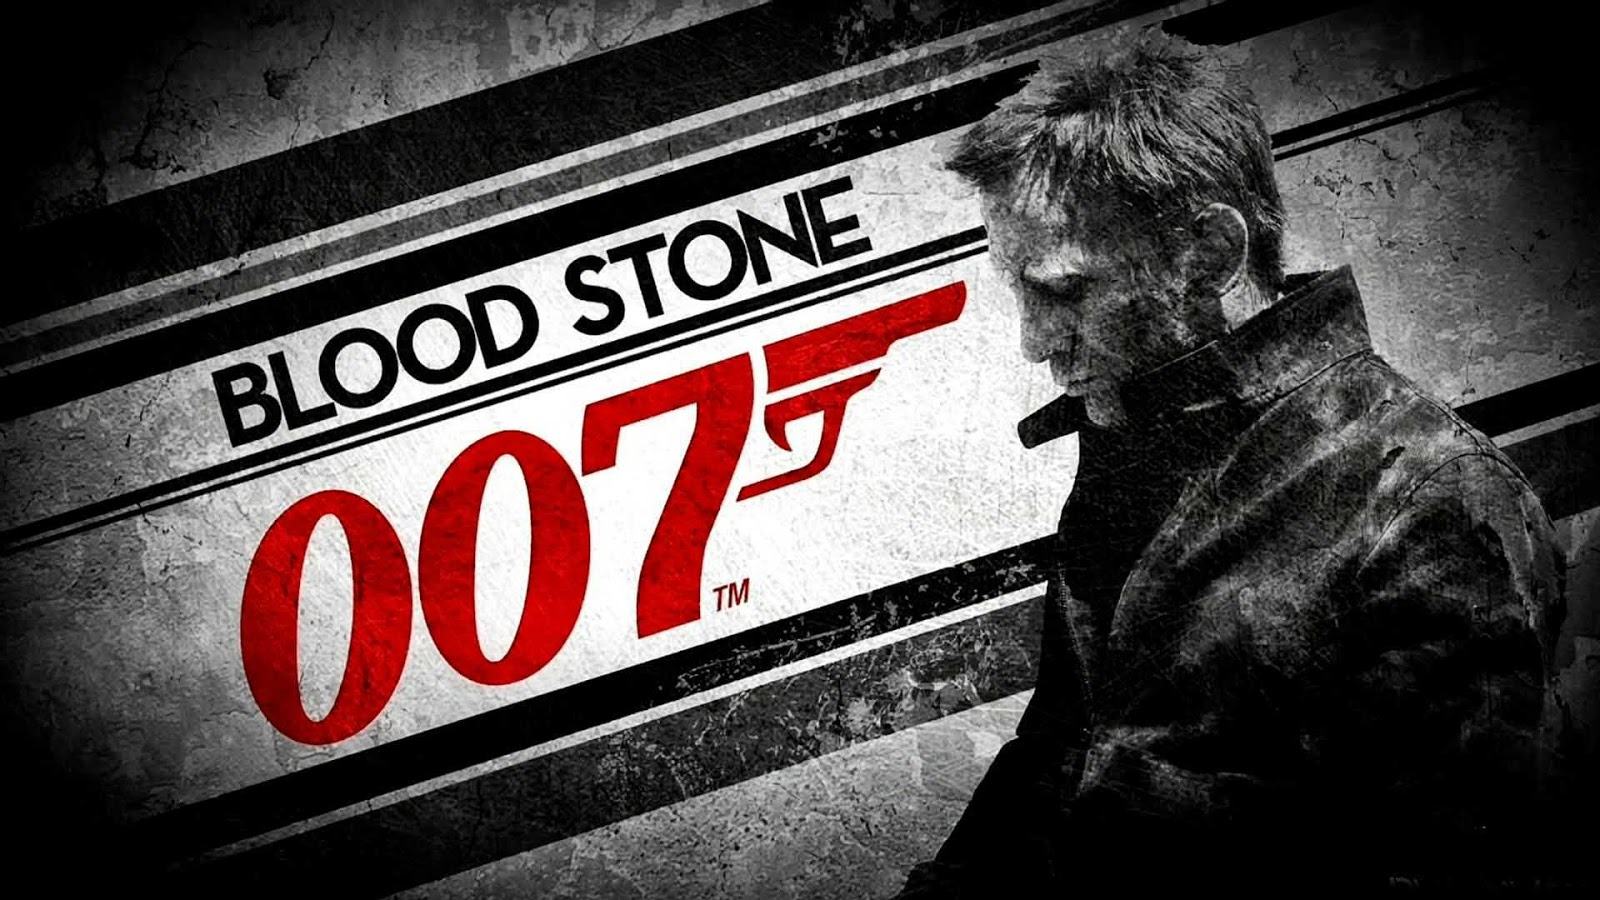 james bond 007 blood stone pc crack free download